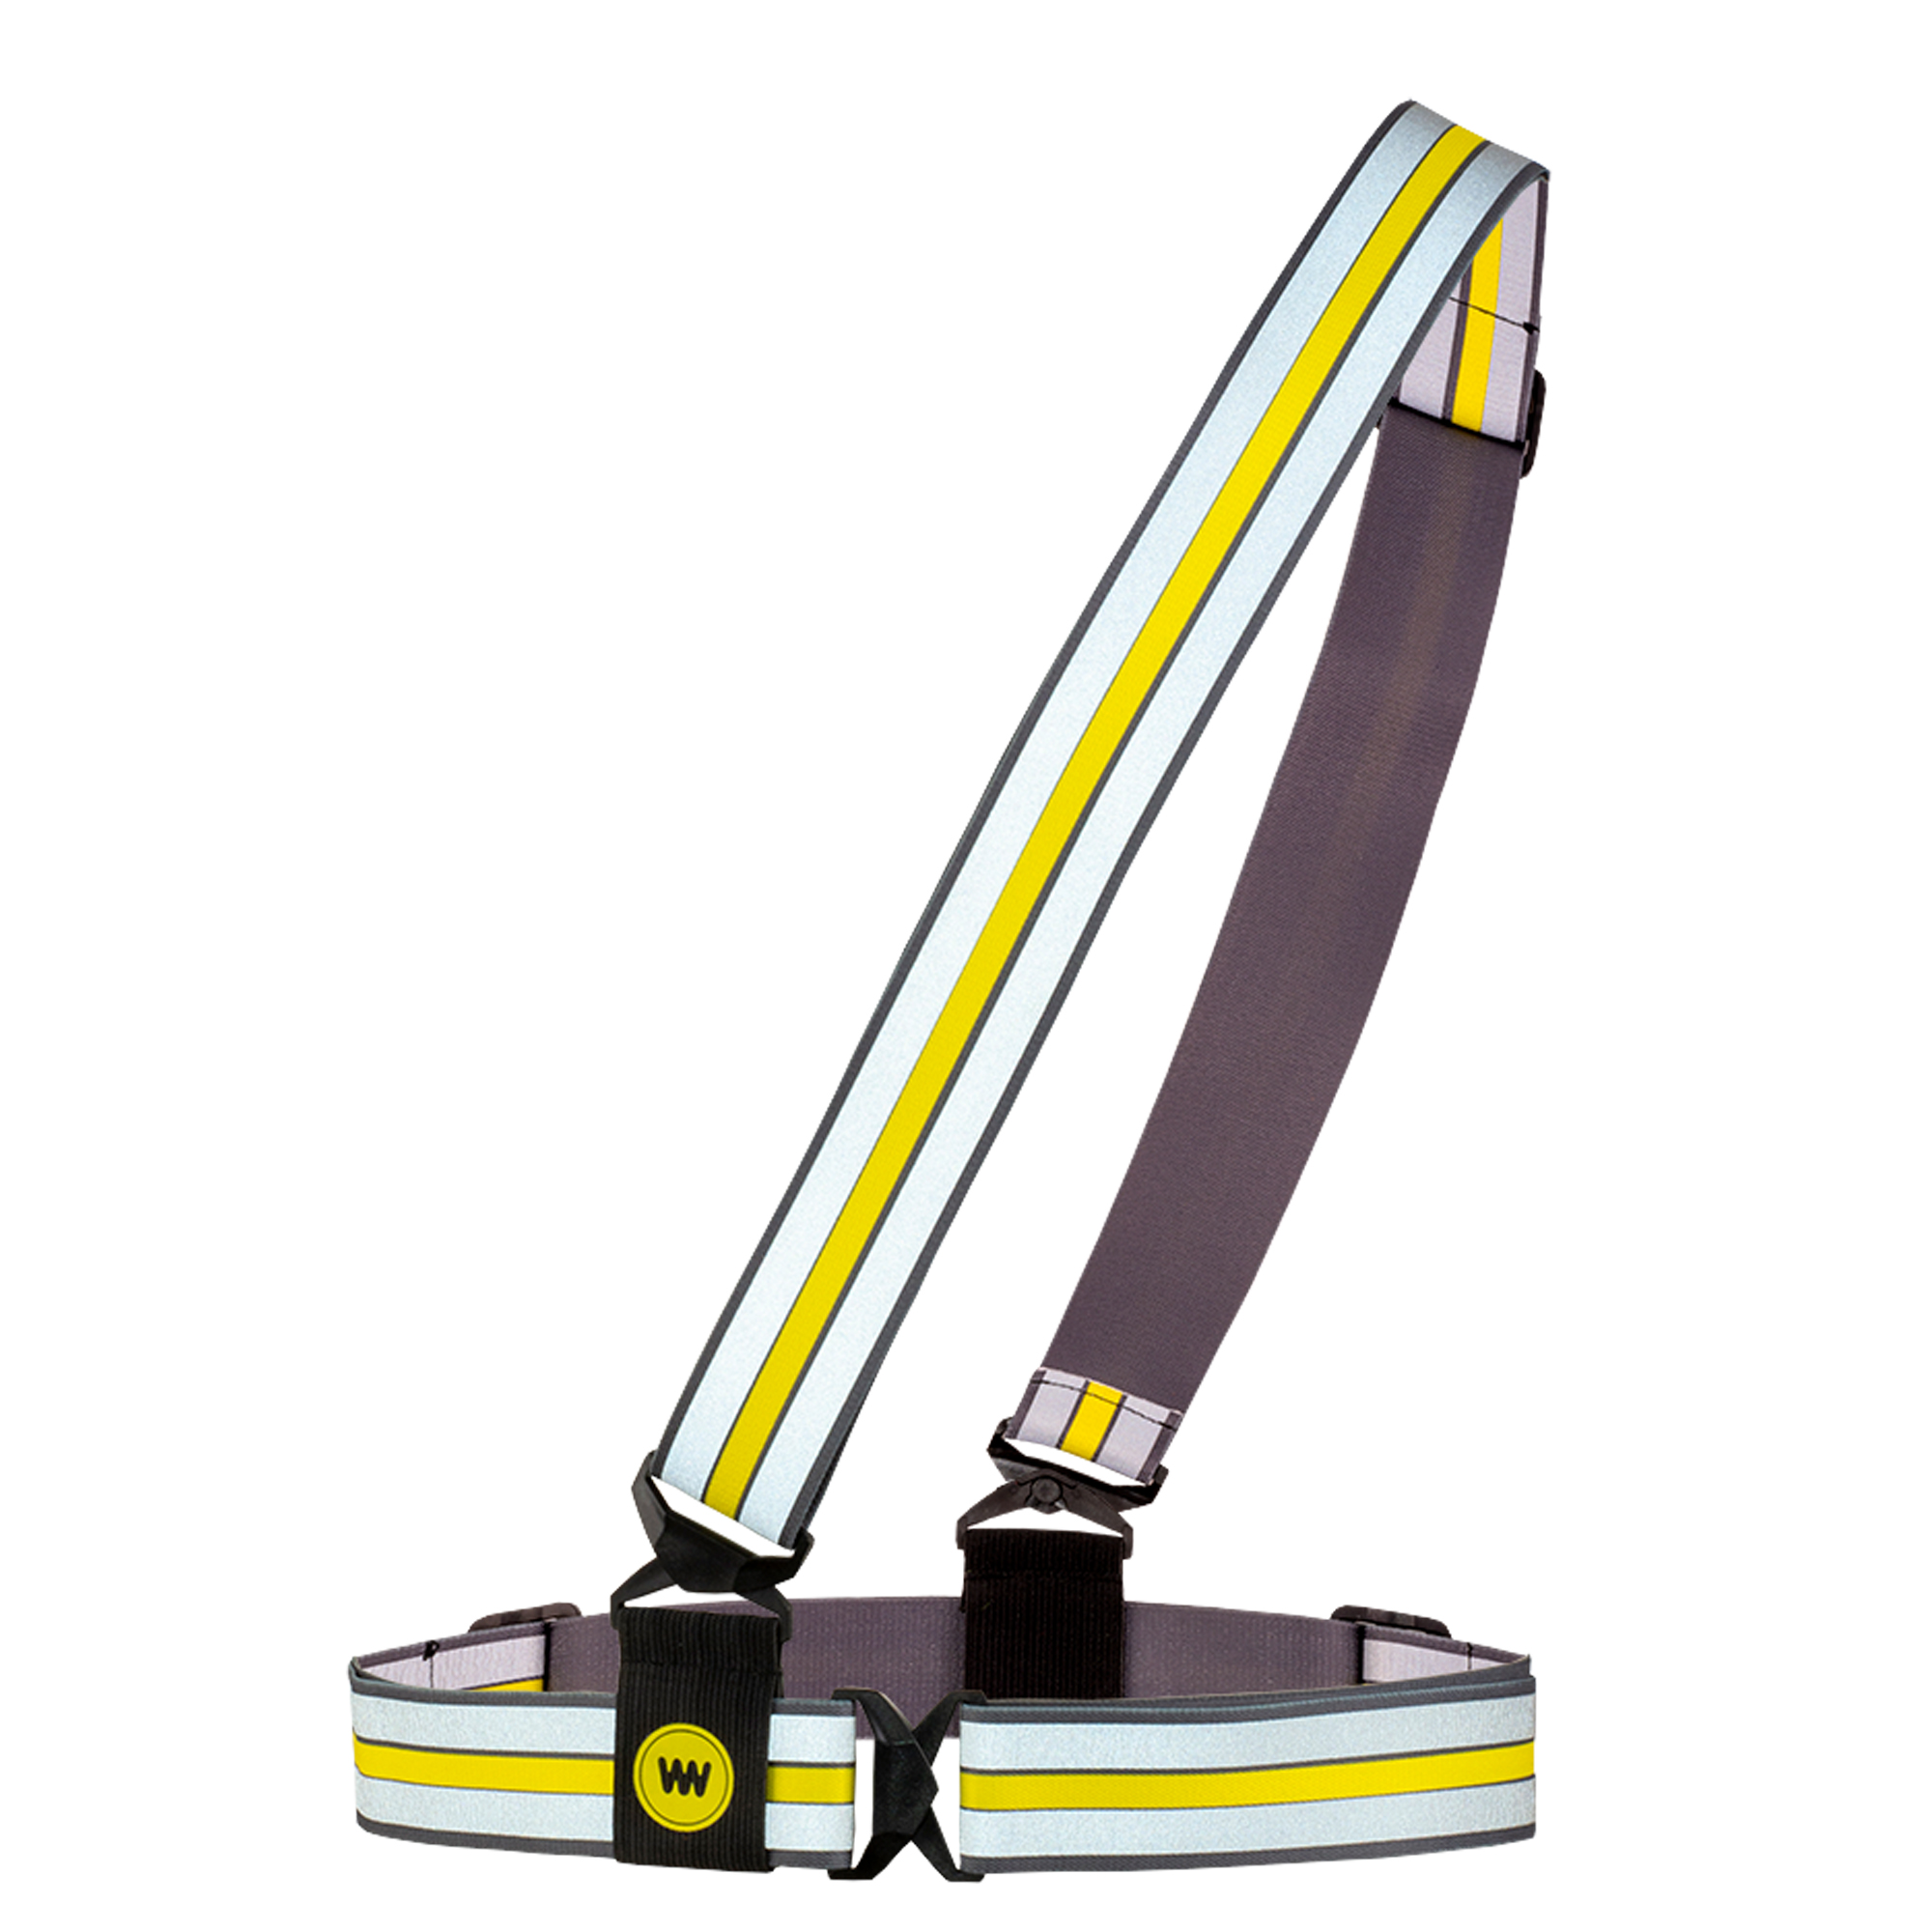 Banda sicurezza alta visibilitA' Cross Wrap - regolabile - giallo fluo - WoWow